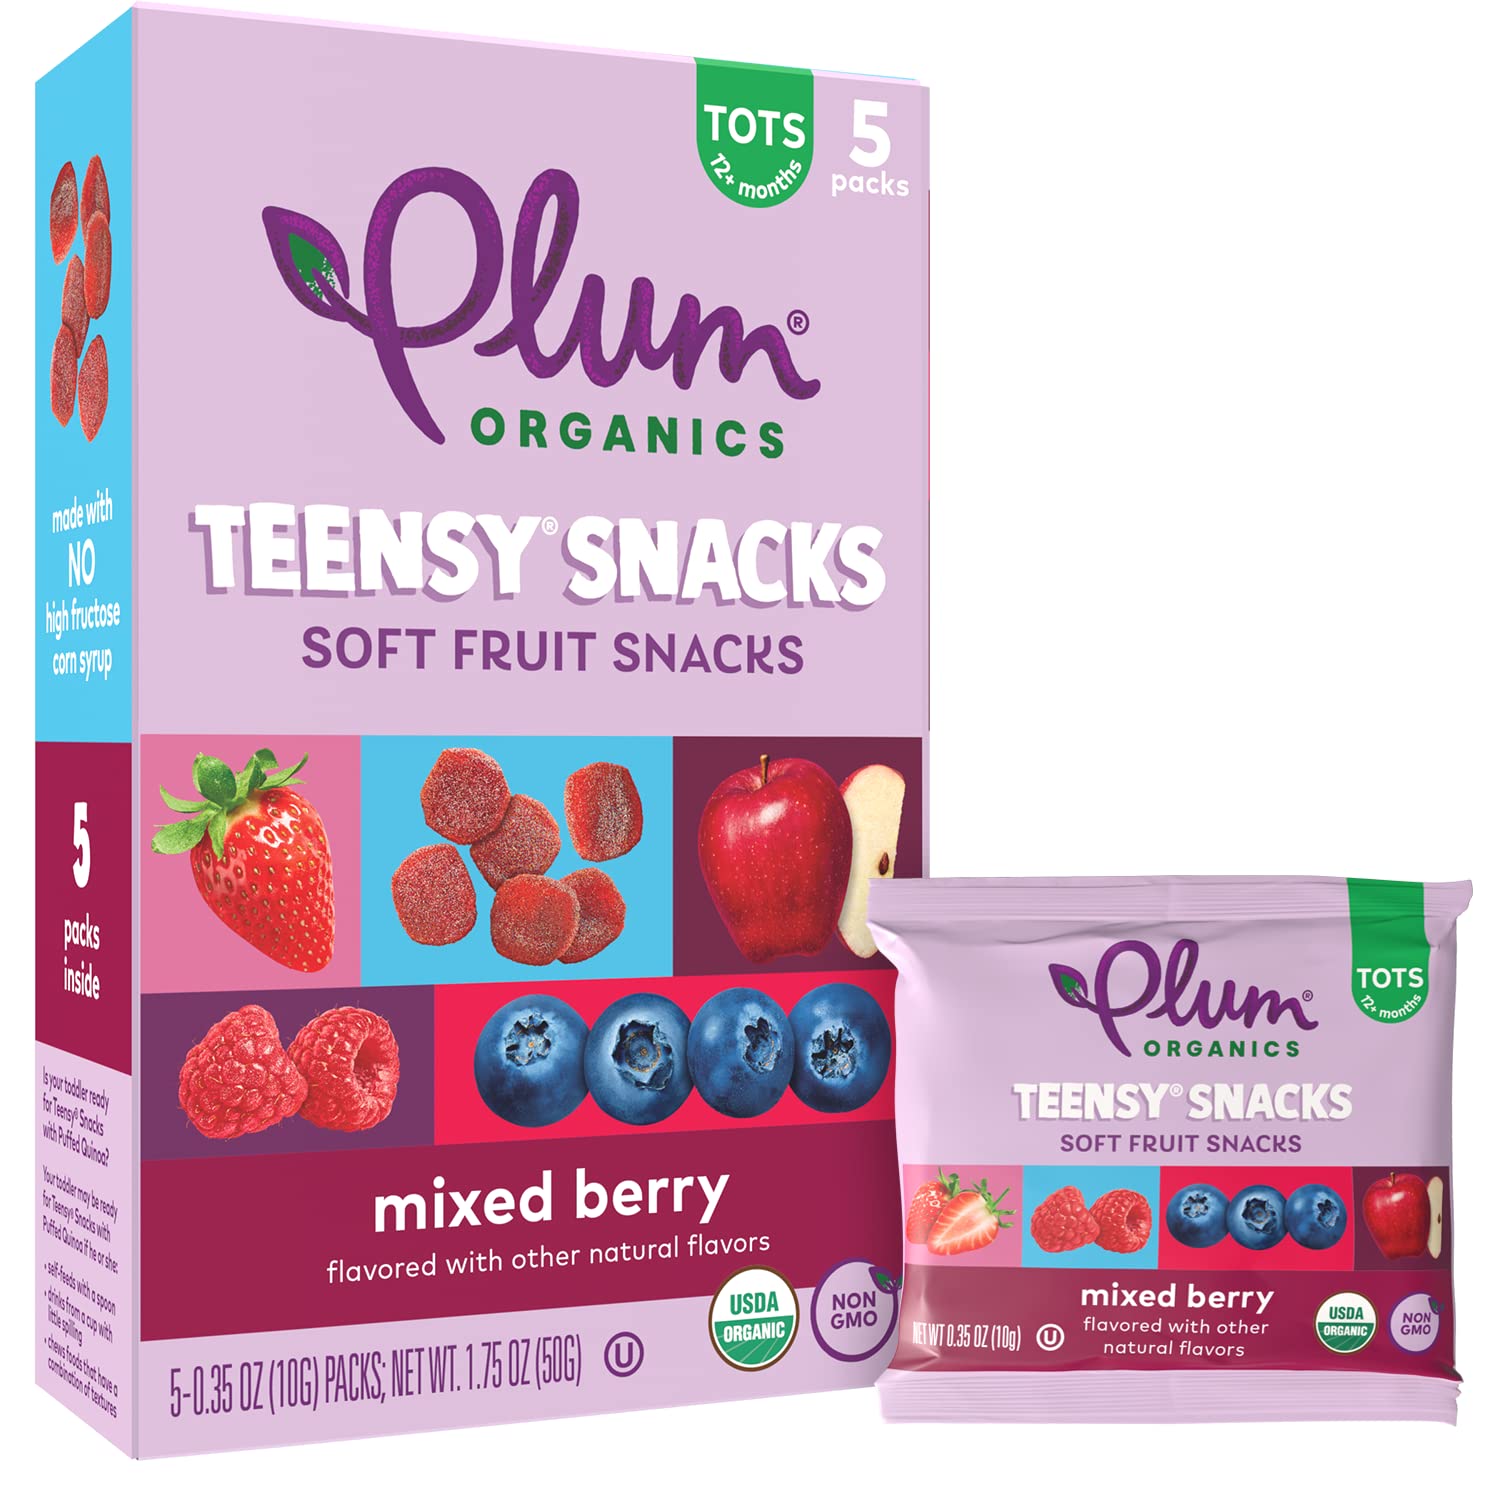 Plum Organics Teensy Snacks Soft Fruit Snacks - Mixed Berry - 0.35 oz Bags (Pack of 5) - Organic Toddler Food Fruit Snacks